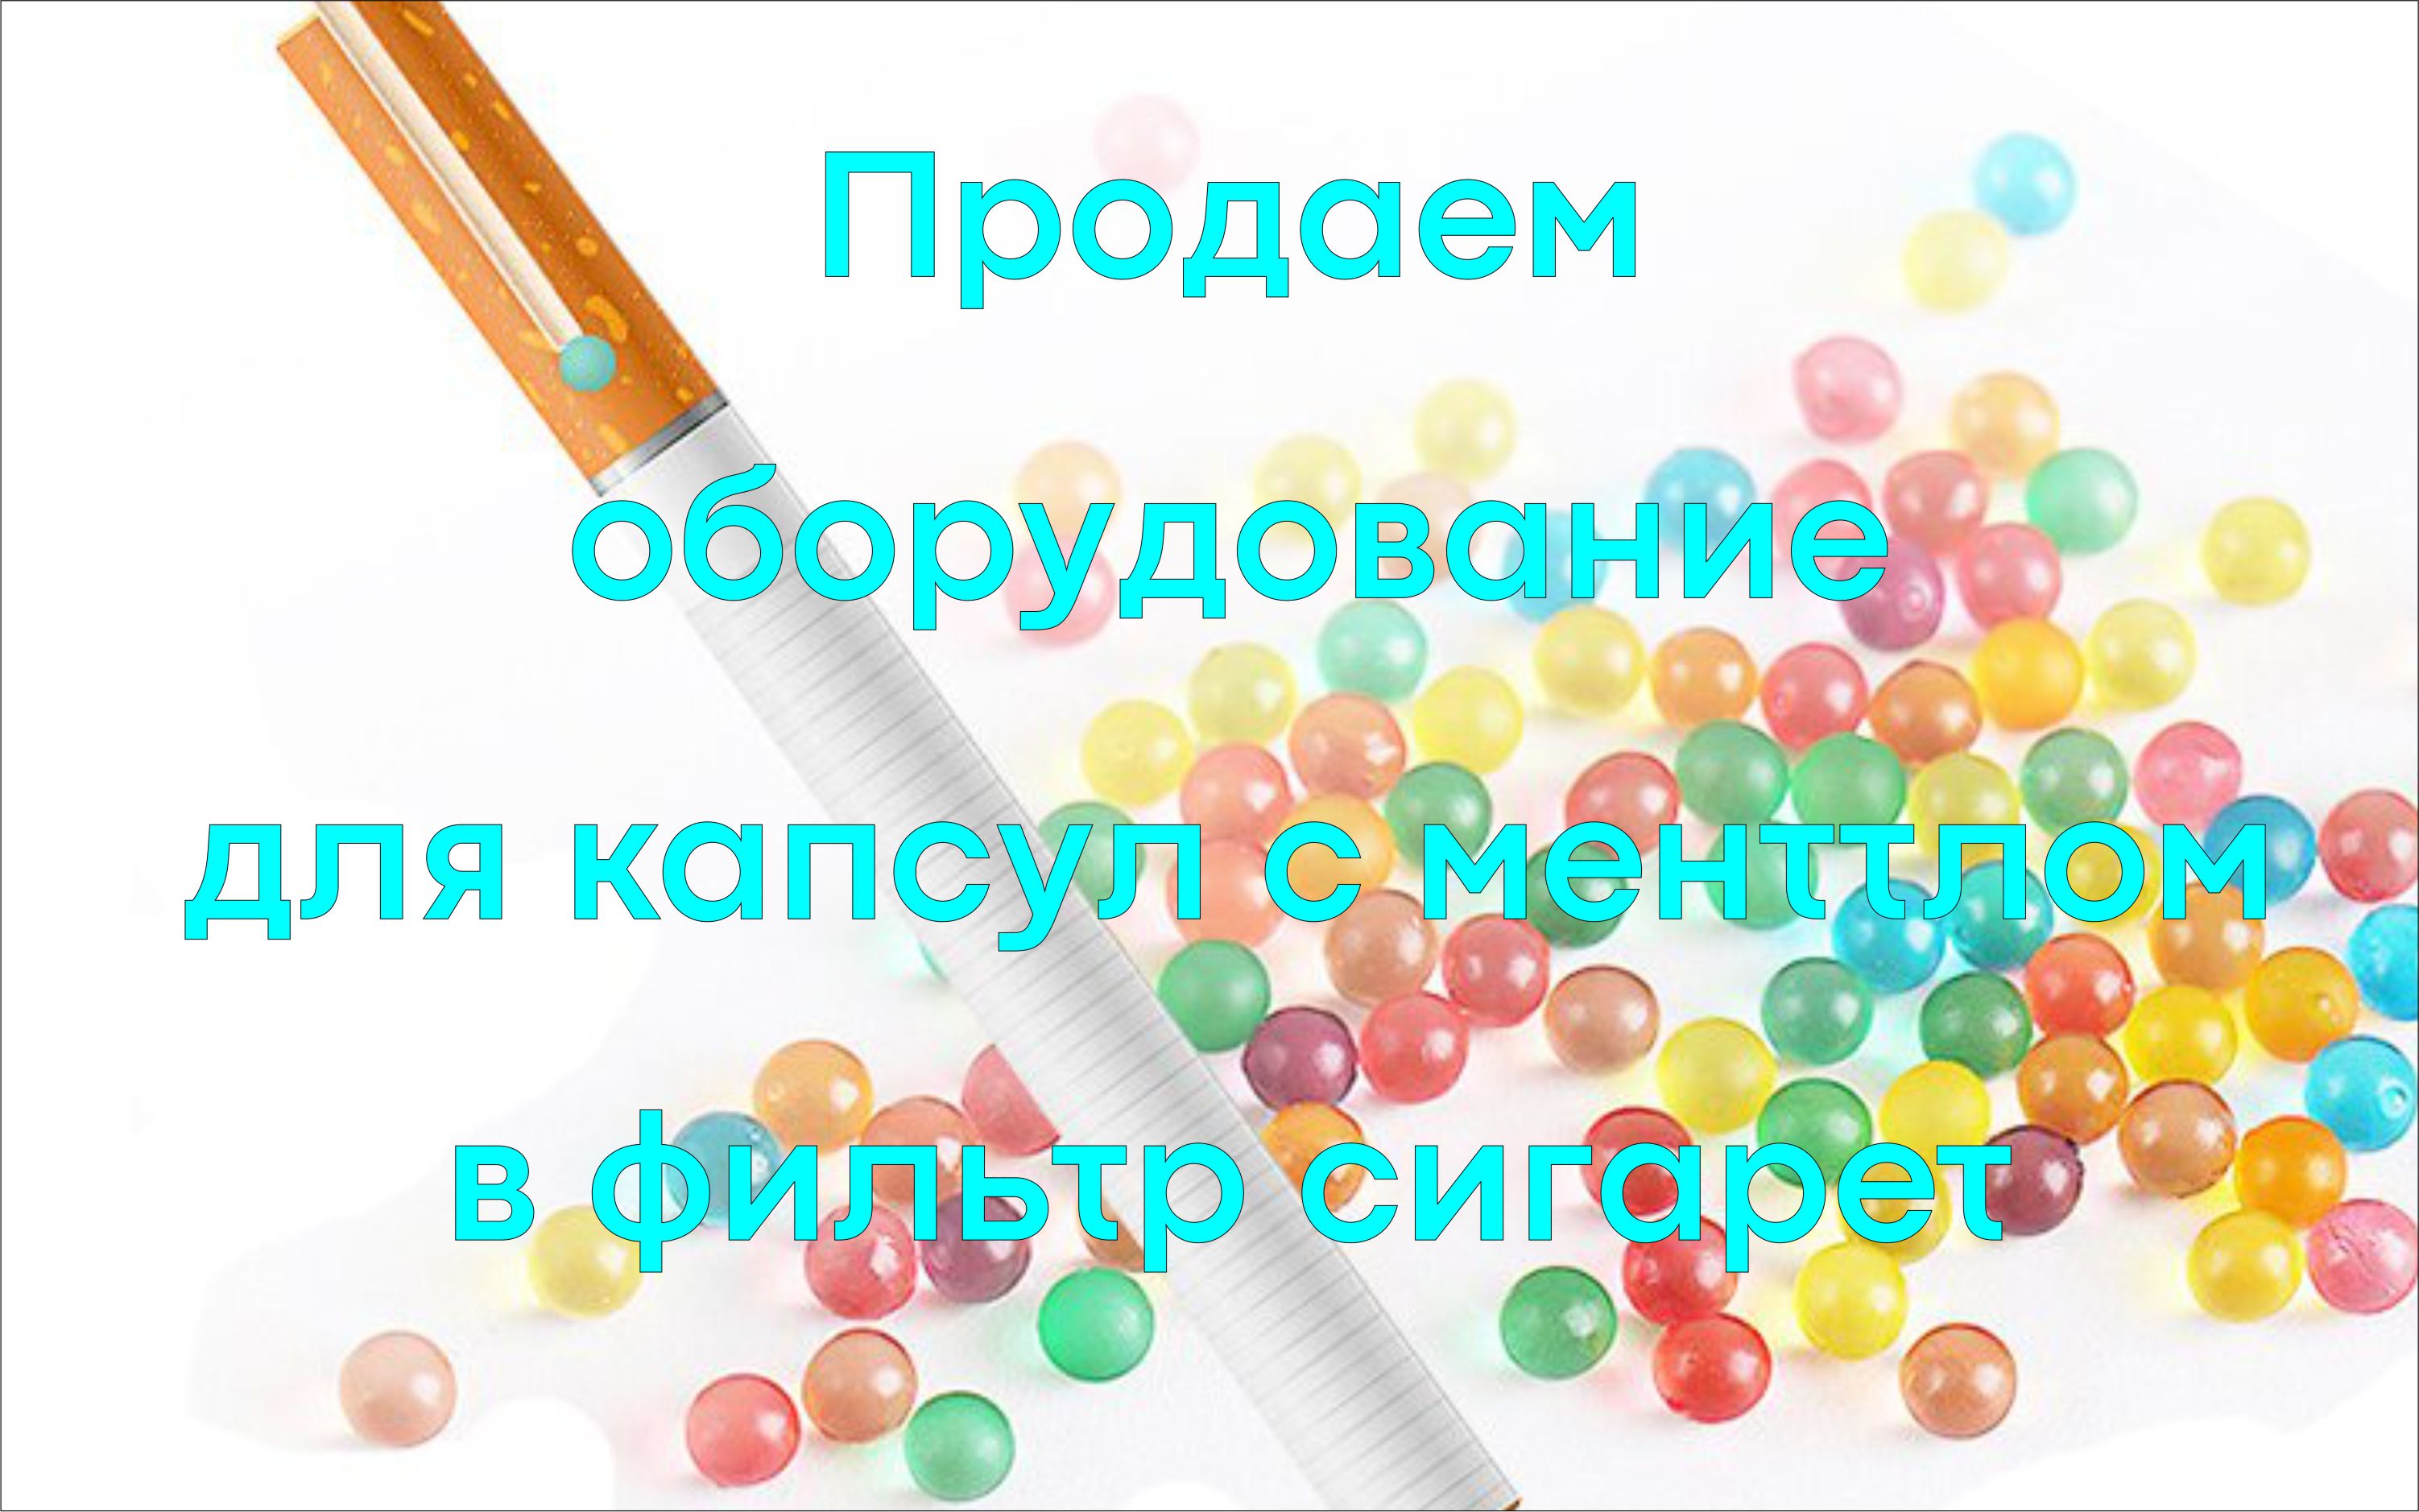 www.Kapsulator.ru Бизнес, Бизнес идеи, Малый бизнес, Бизнес под ключ, Бизнес с нуля, Готовый бизнес